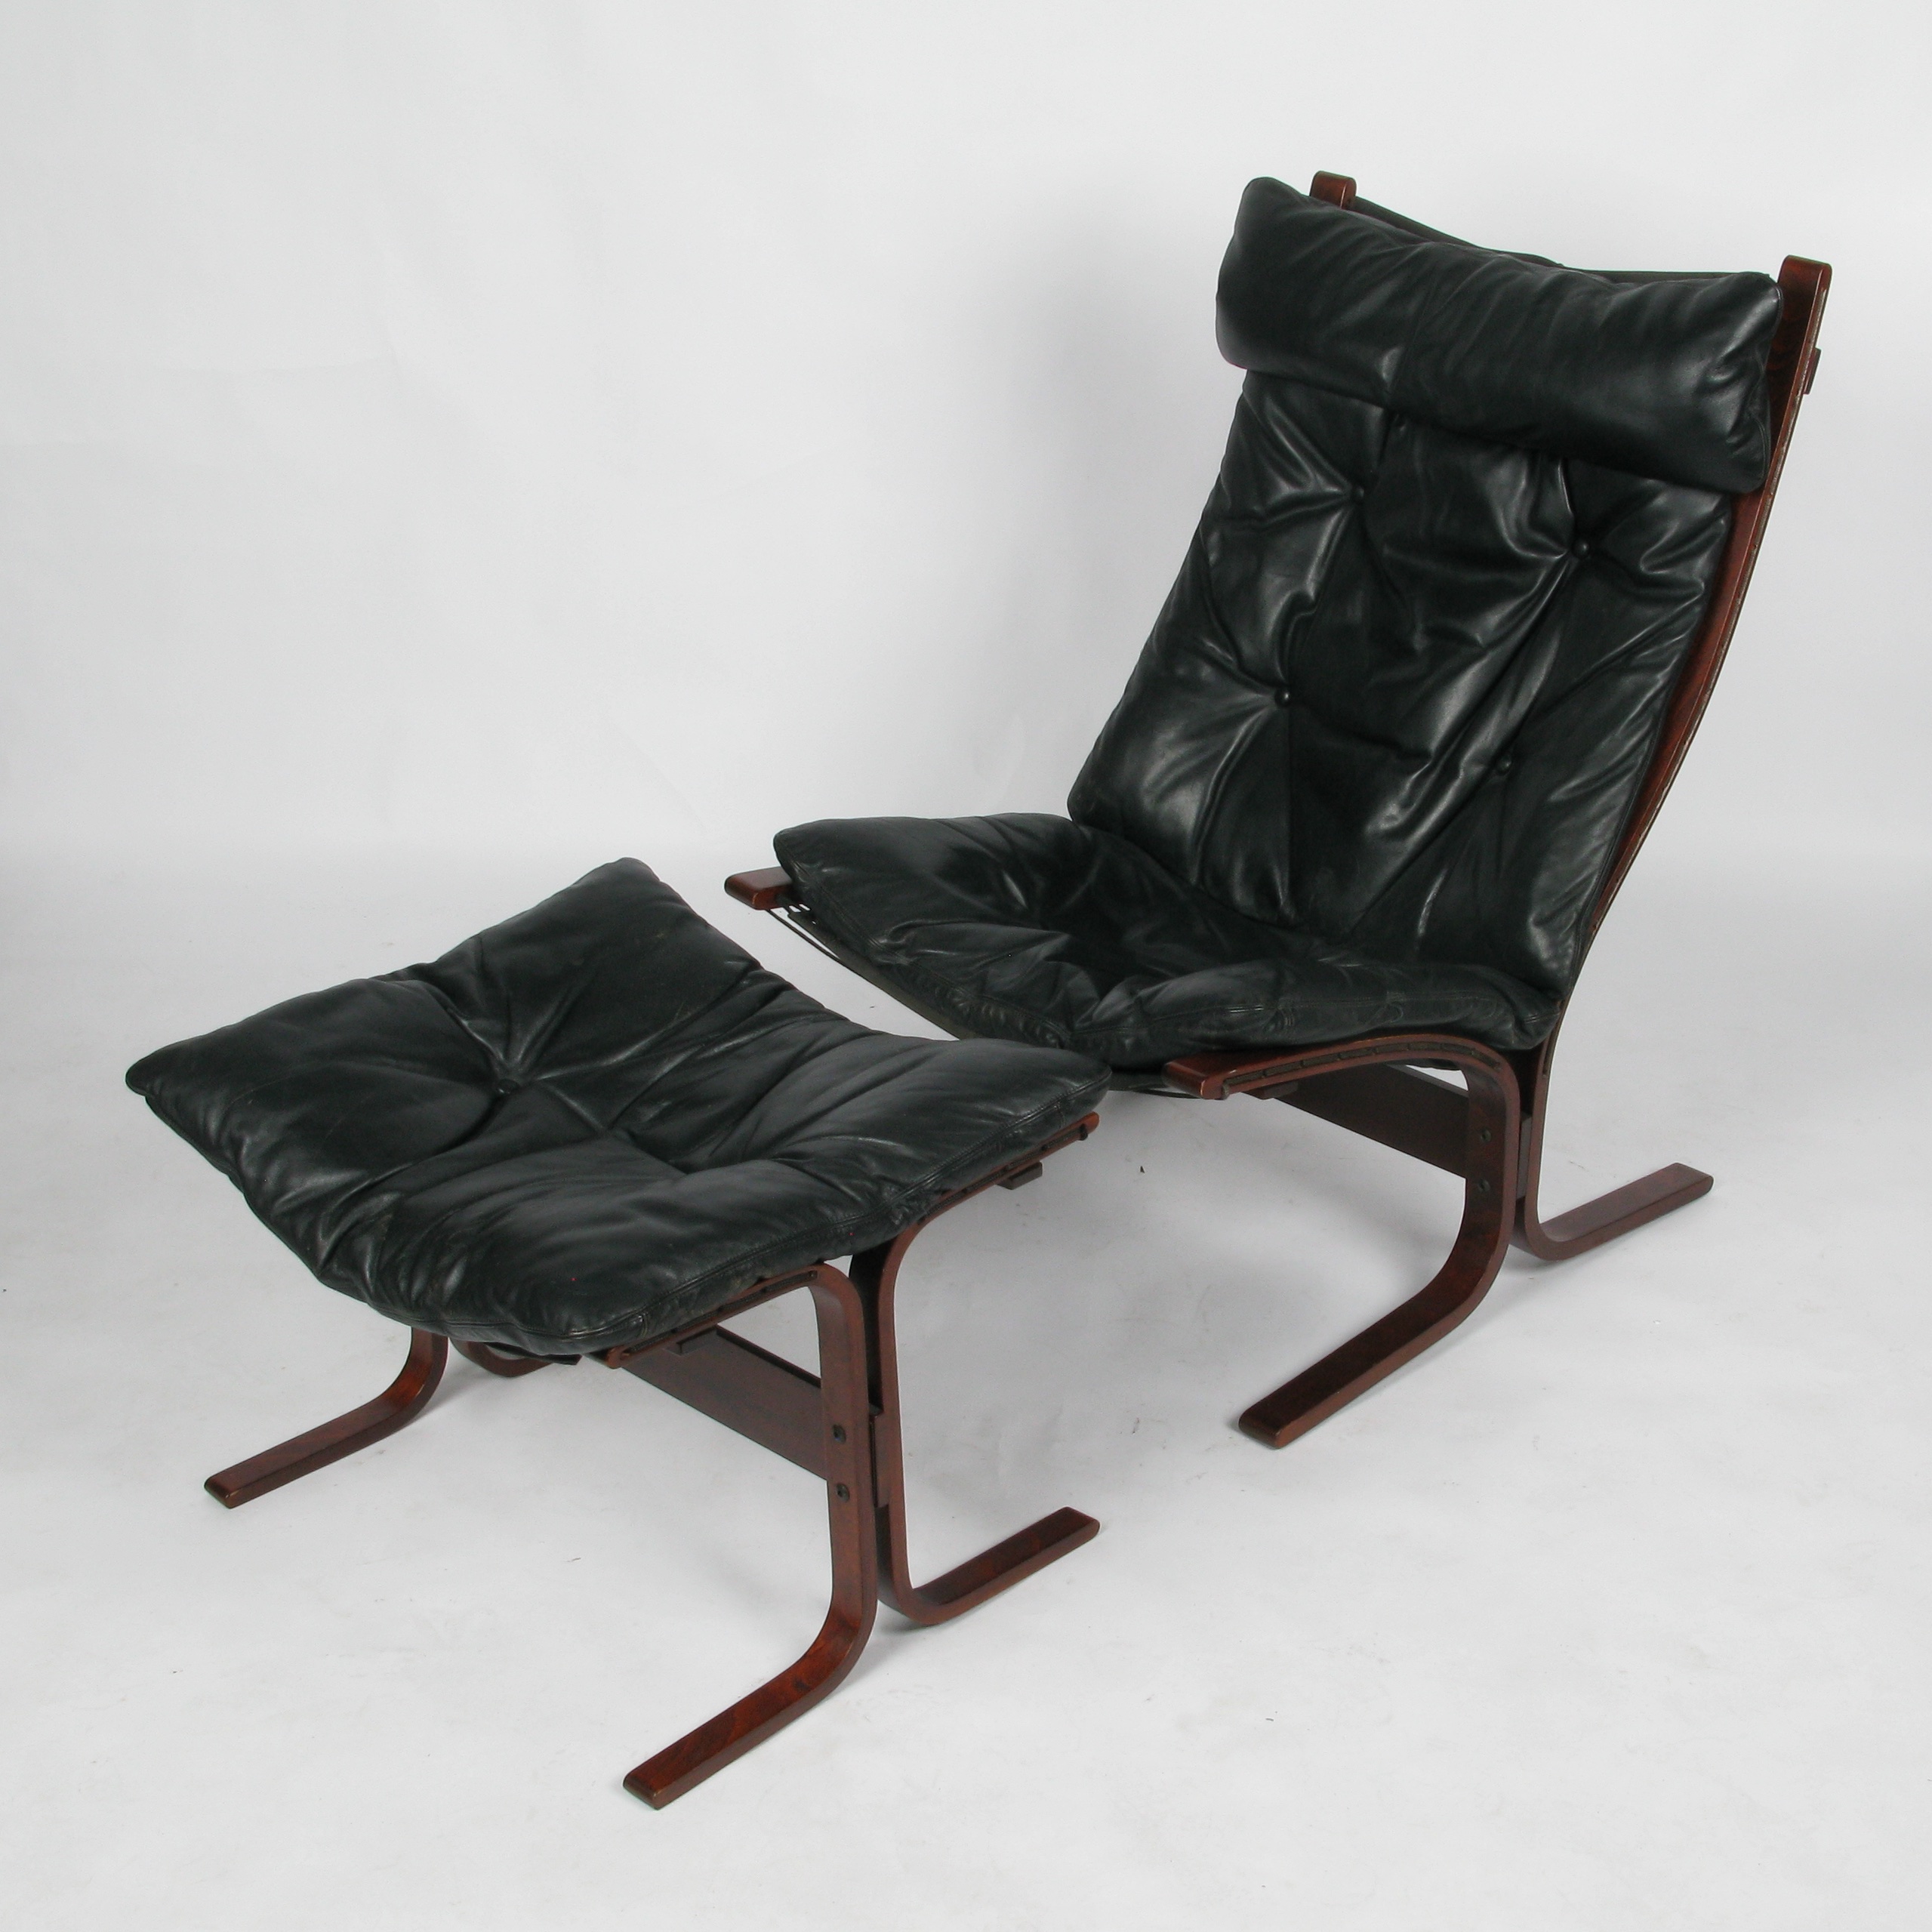 Westnofa Chair & Ottoman at City Issue Atlanta